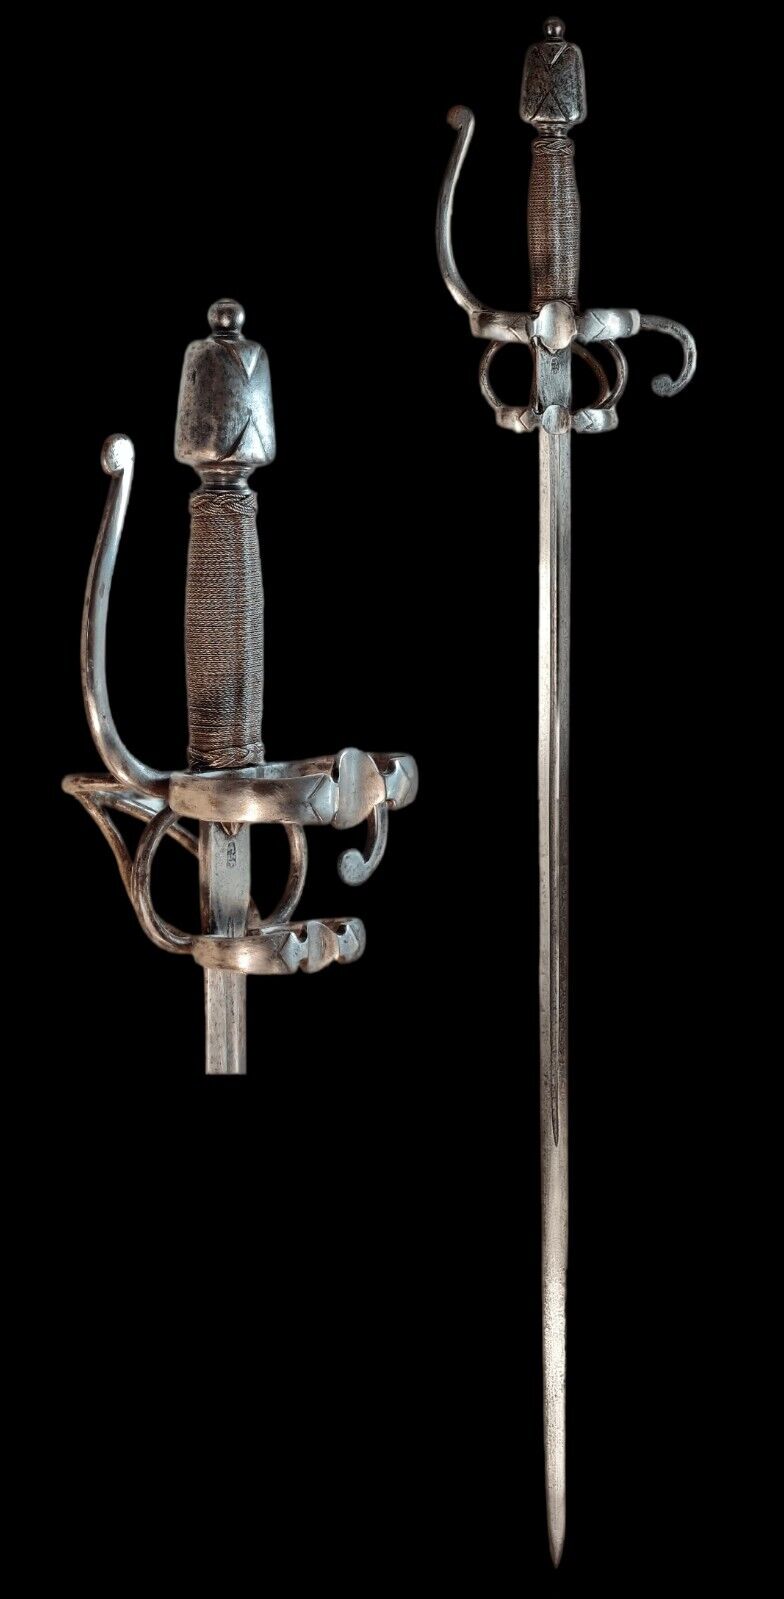 German rapier sword. Saxony. Signed blade. Circa 1590-1620. Rare.